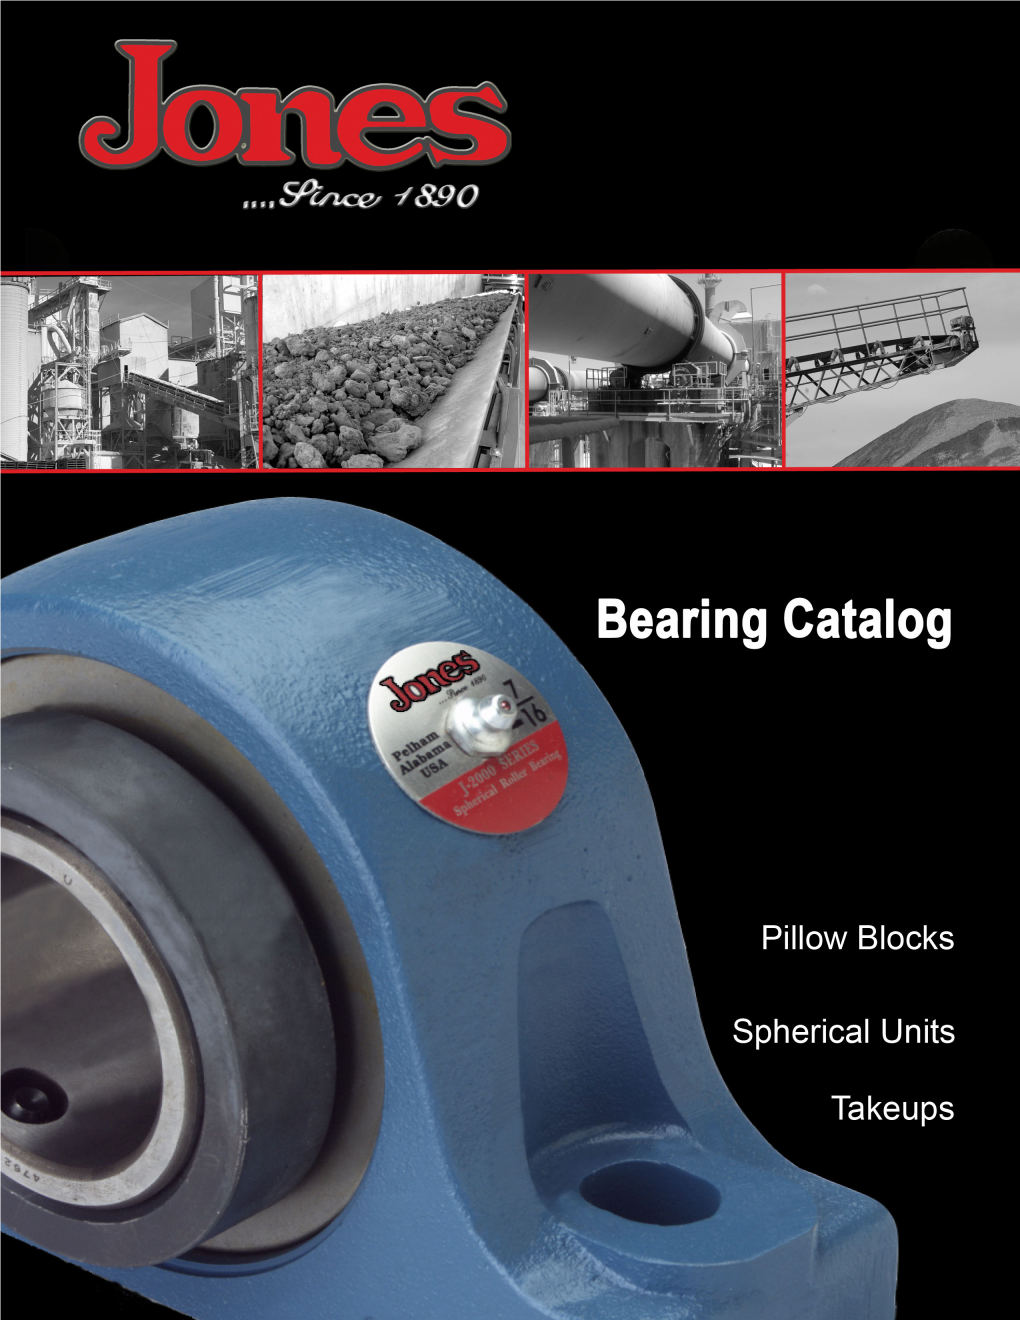 Jones Bearing Catalog